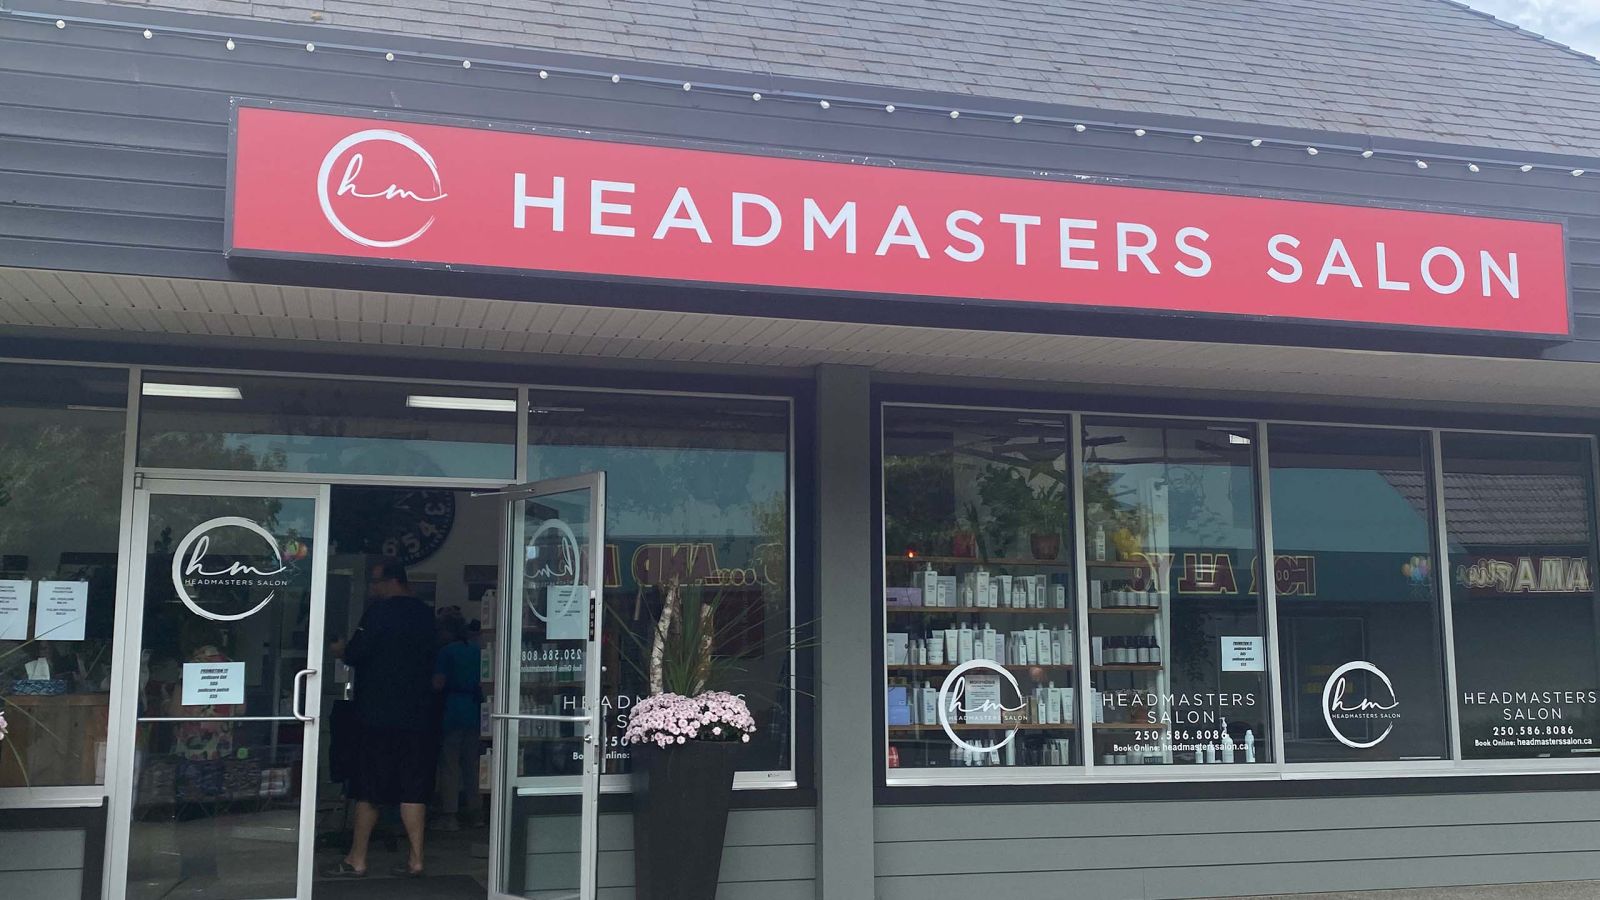 Headmasters Salon storefront